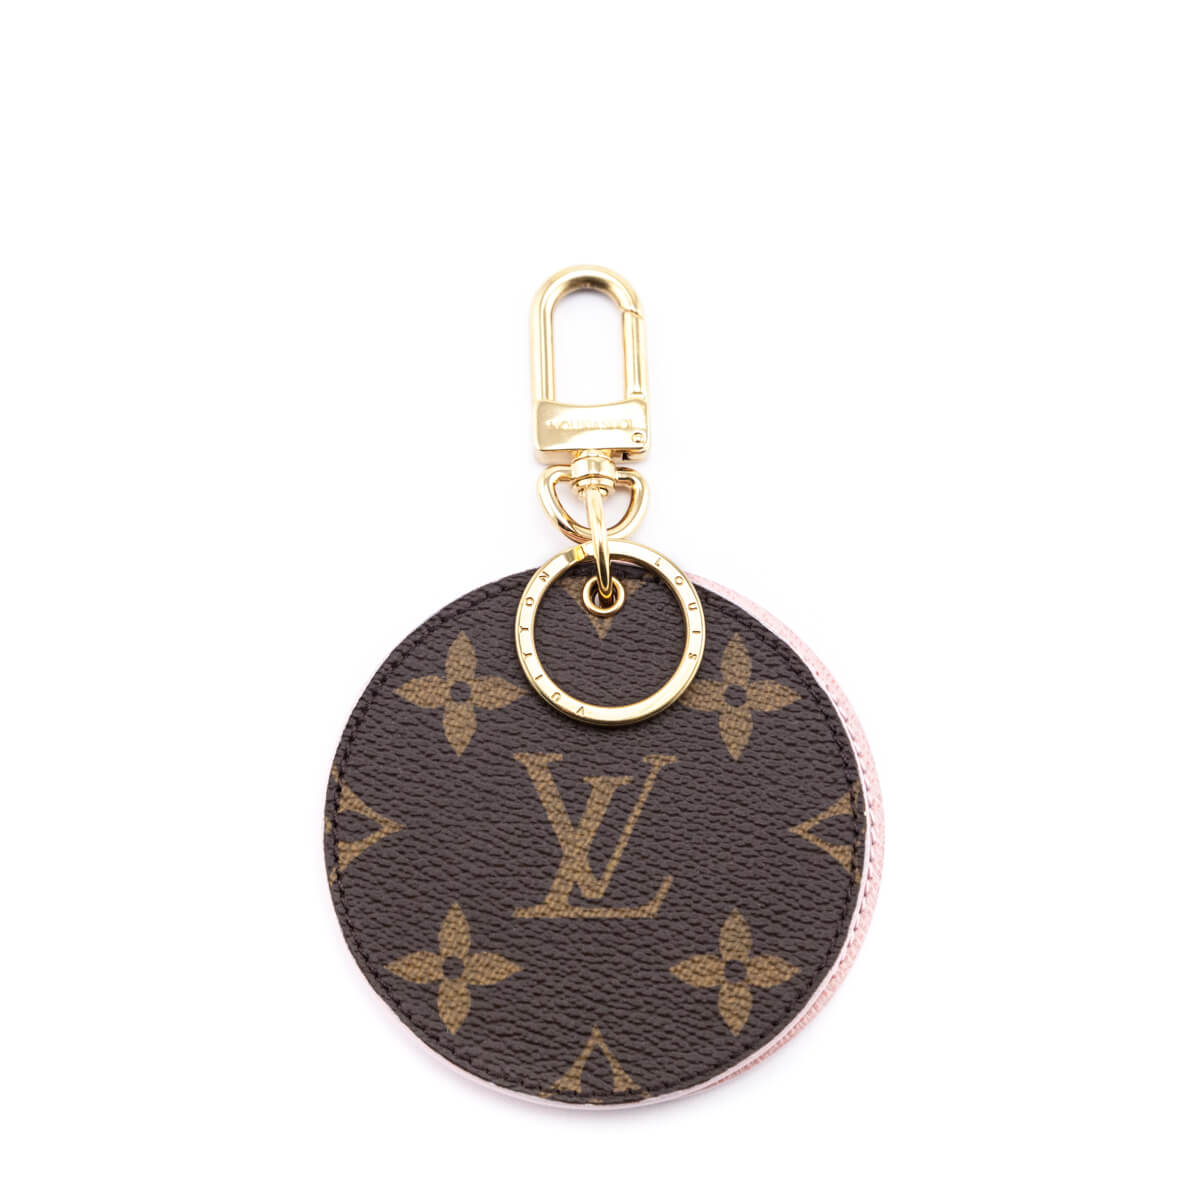 LOUIS VUITTON Monogram LV Mirror Bag Charm Key Holder Rose